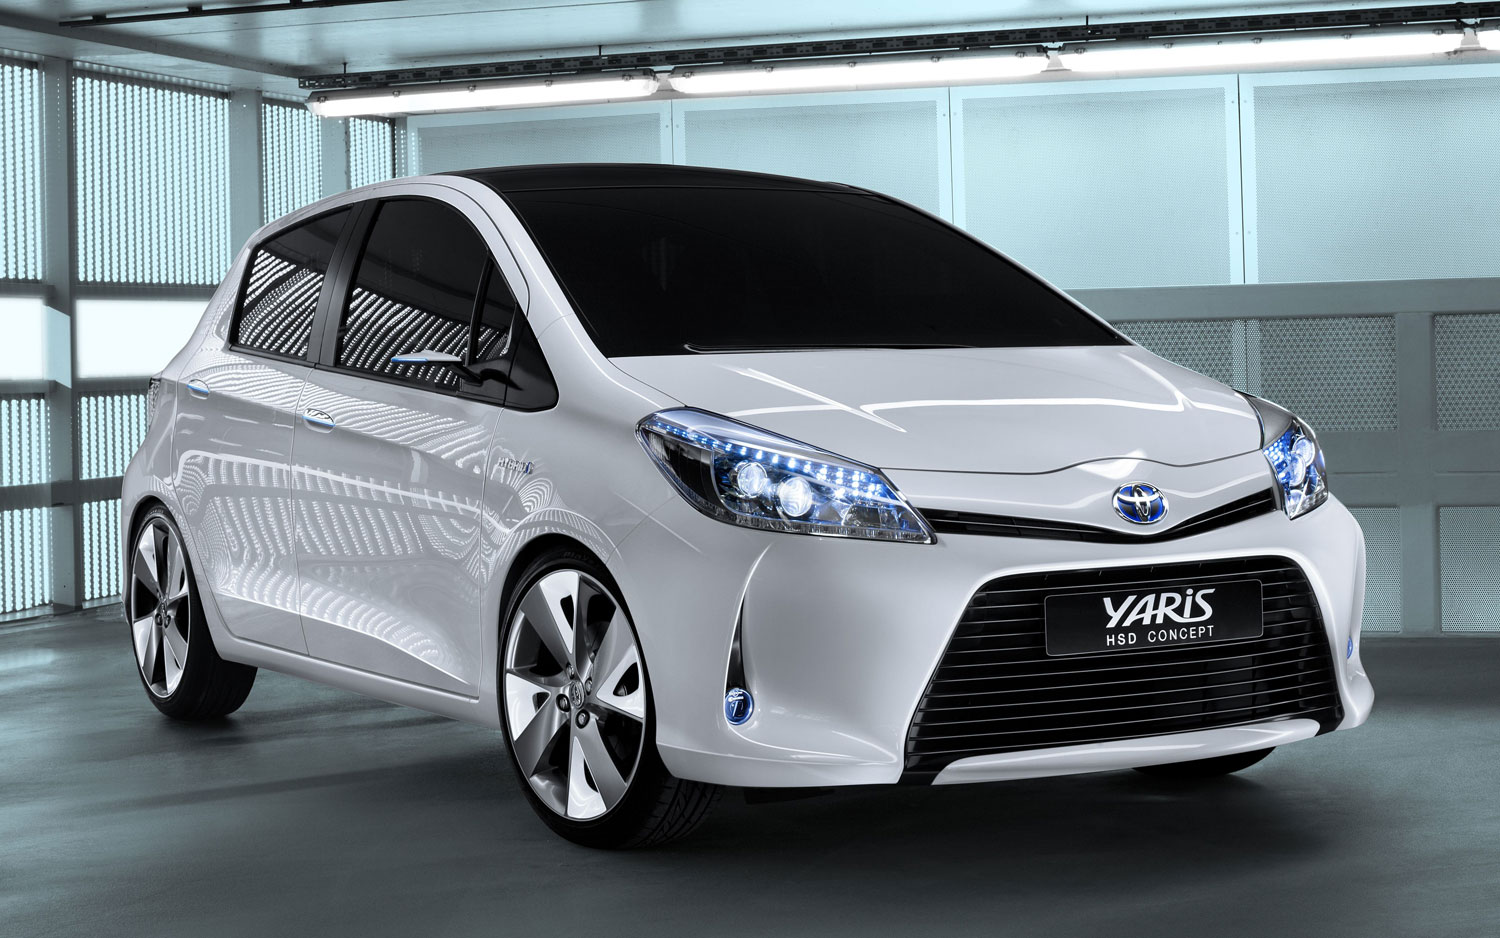 Kumpulan Modifikasi Toyota Yaris Terbaru 2014 Blog Modifikasi